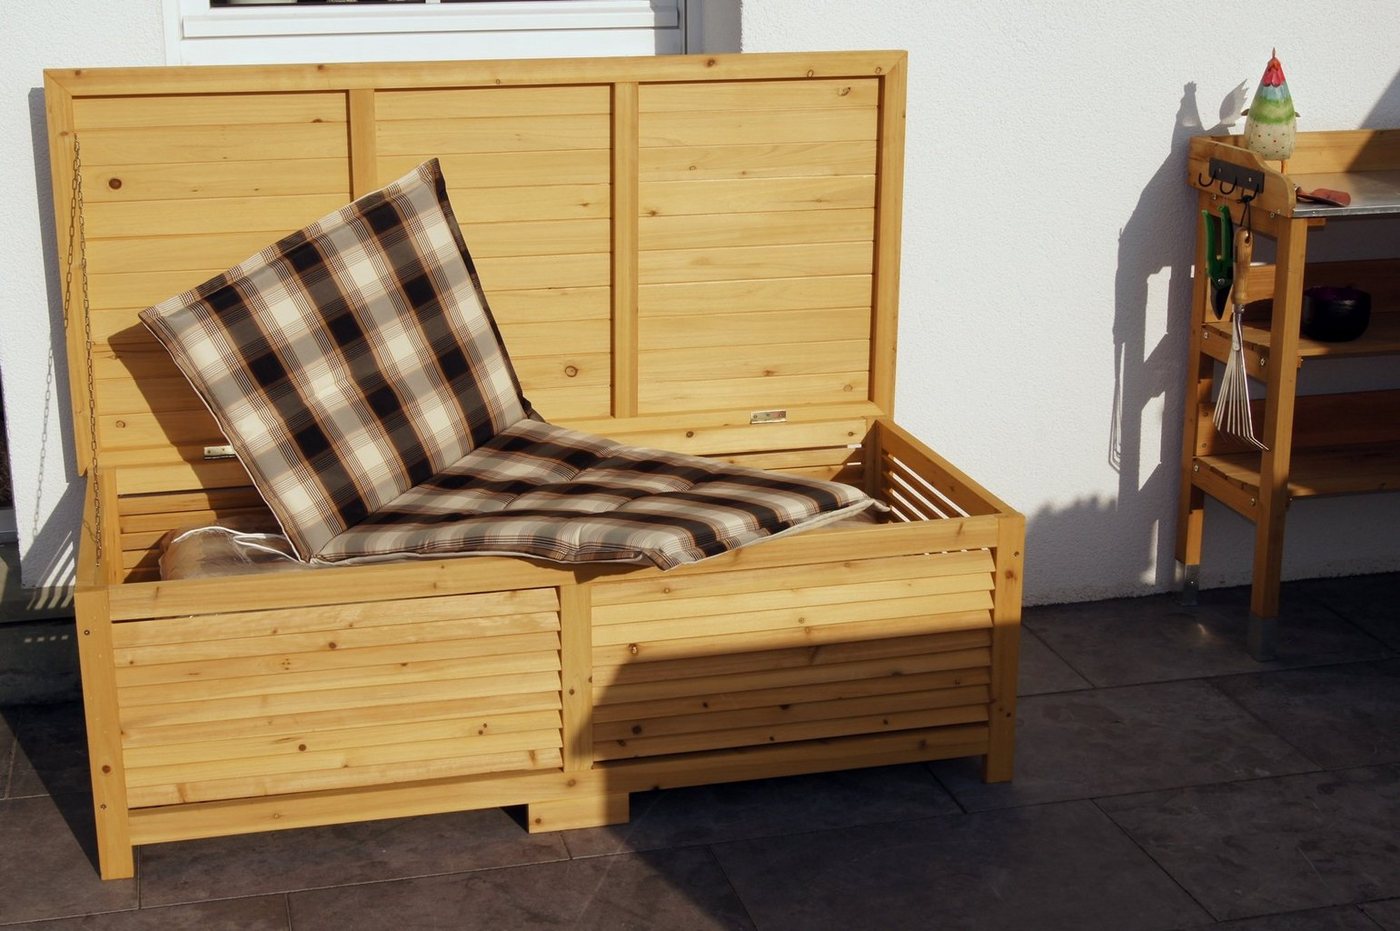 metra-direkt Gartenbox Holz Auflagenbox - Kissenbox - Gartentruhe - 140x65x46 cm, Imprägniertes Kiefernholz, Stabil, Geräumig von metra-direkt